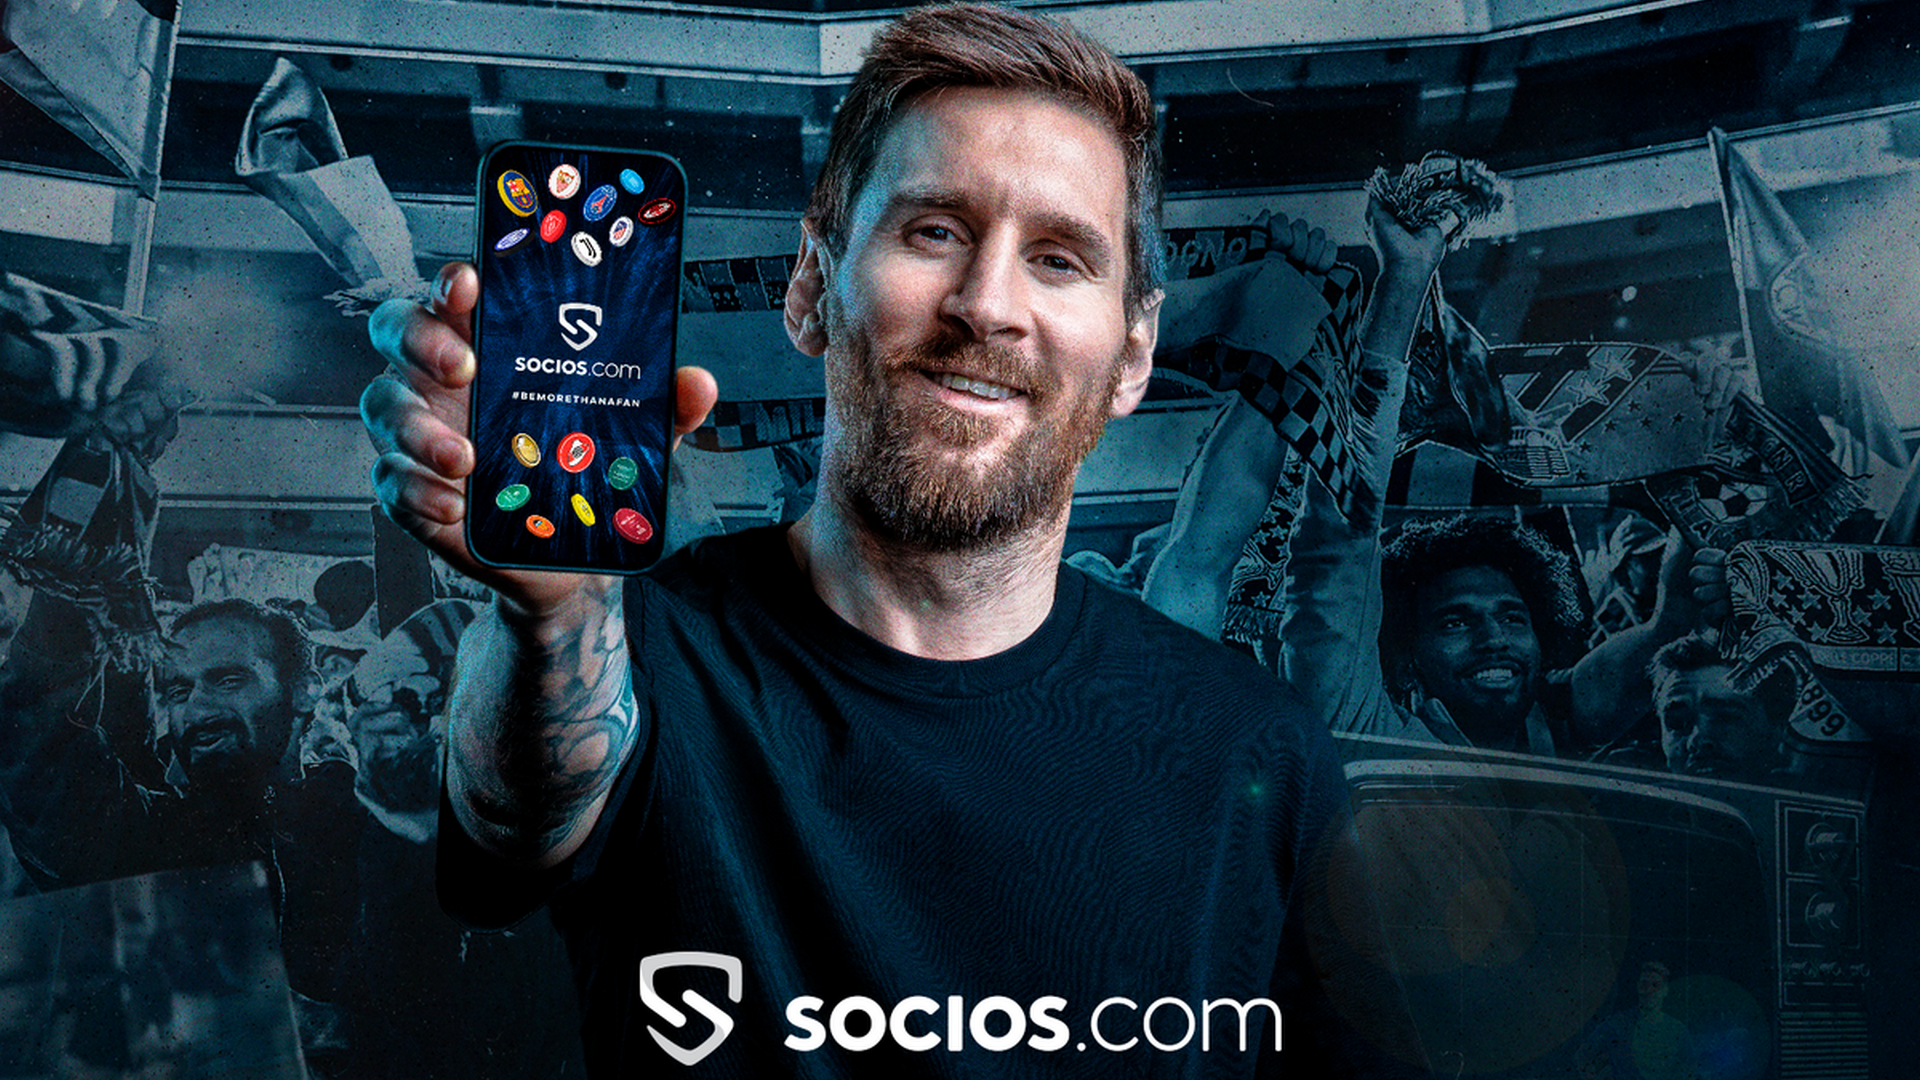 Socios.com Messi